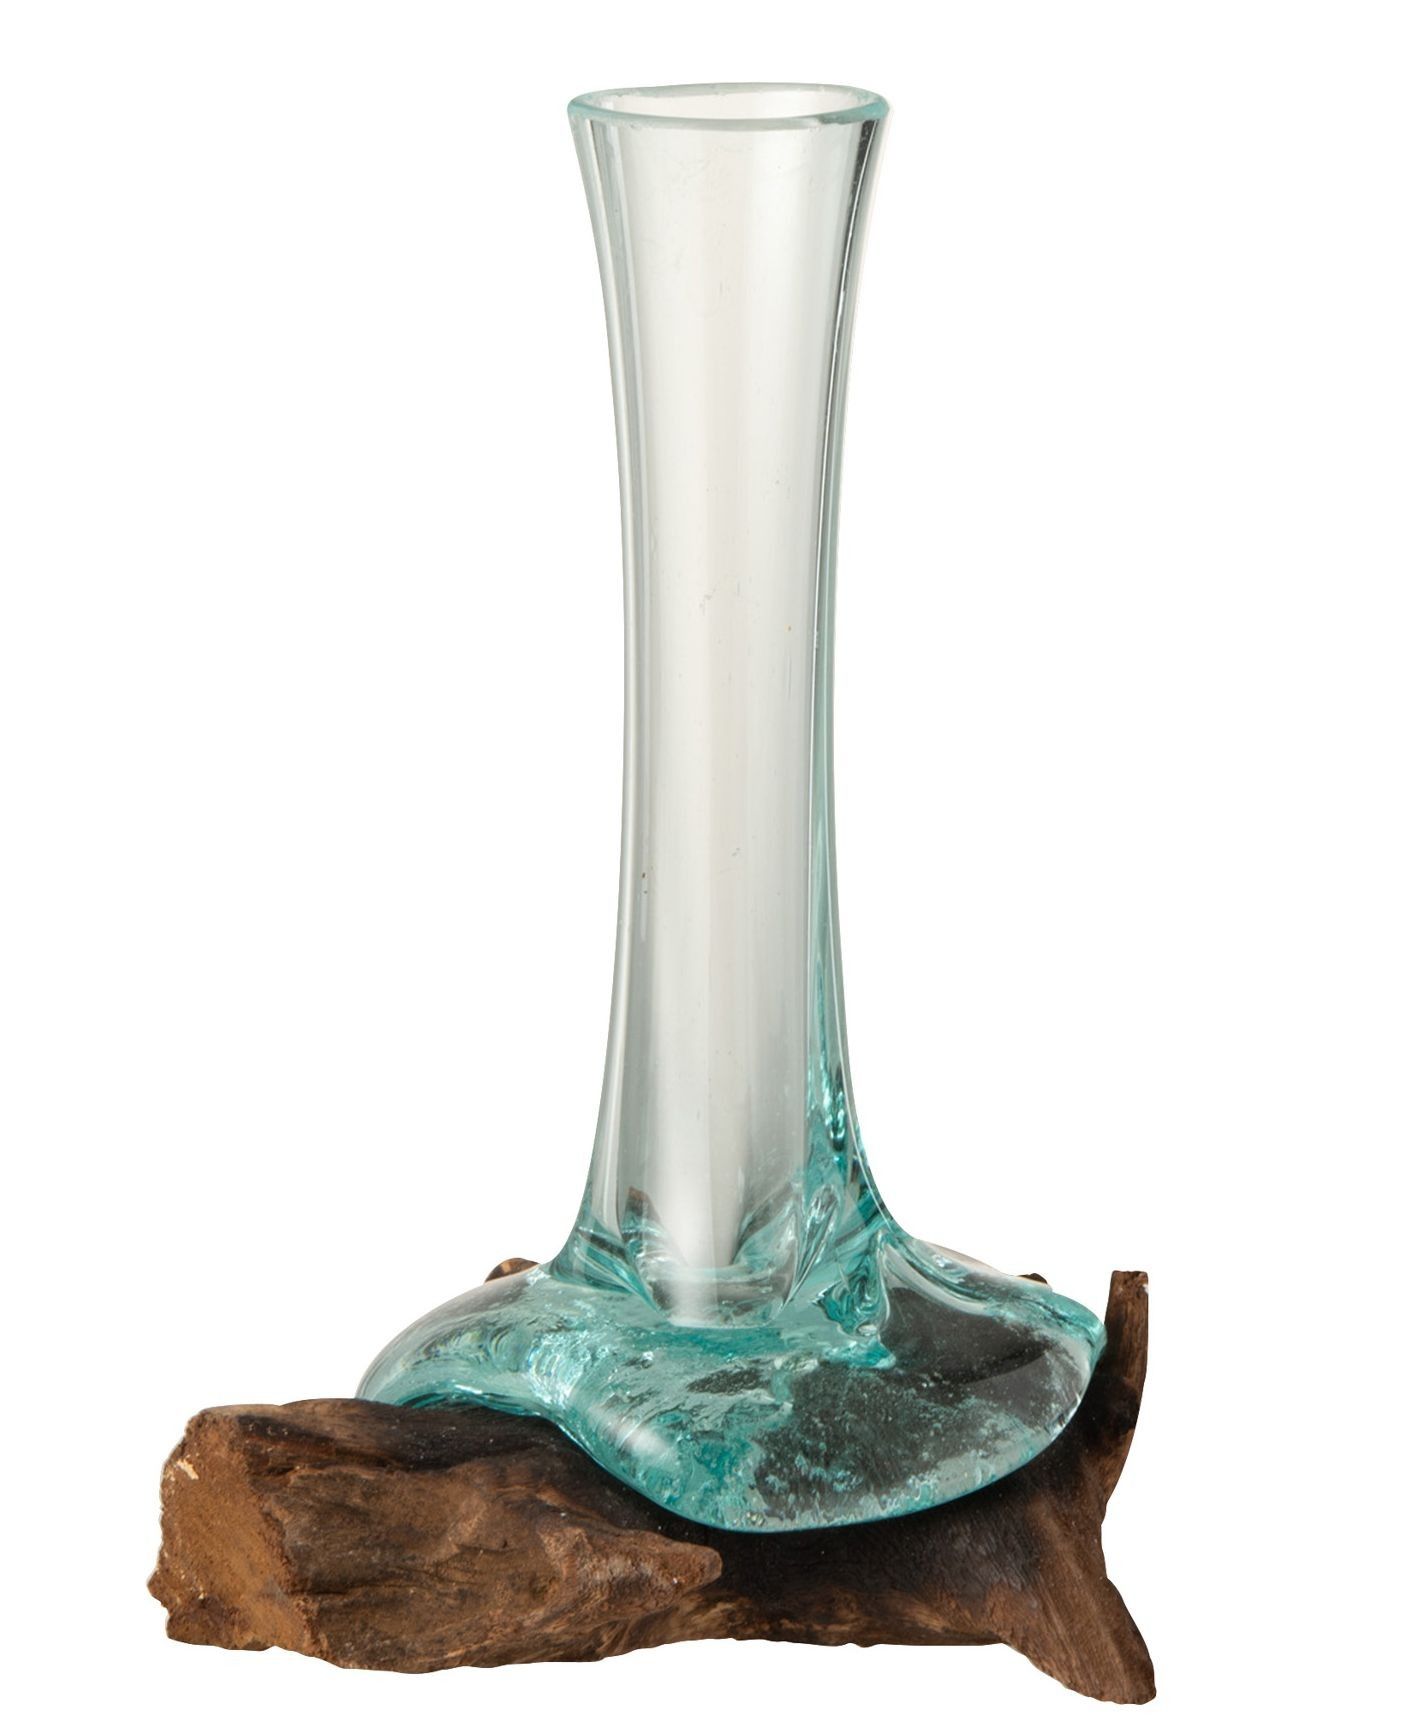 Sklenená úzka váza na koreni dreva Gamal S - 17*13*16 cm